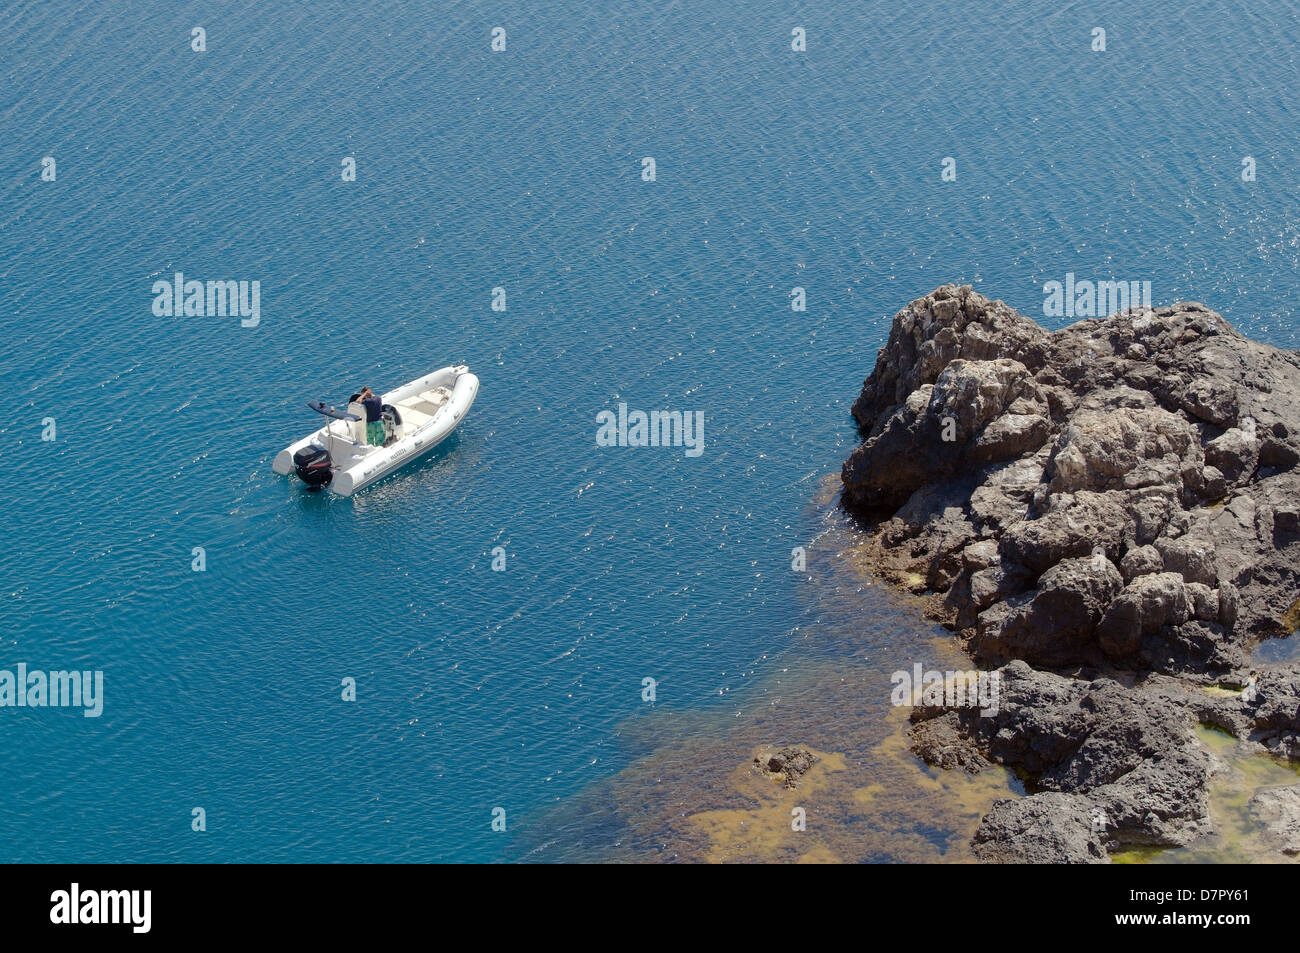 Una piccola barca nella baia, penisola Tarhankut, Tarhan Qut, Crimea, Ucraina, Europa orientale Foto Stock